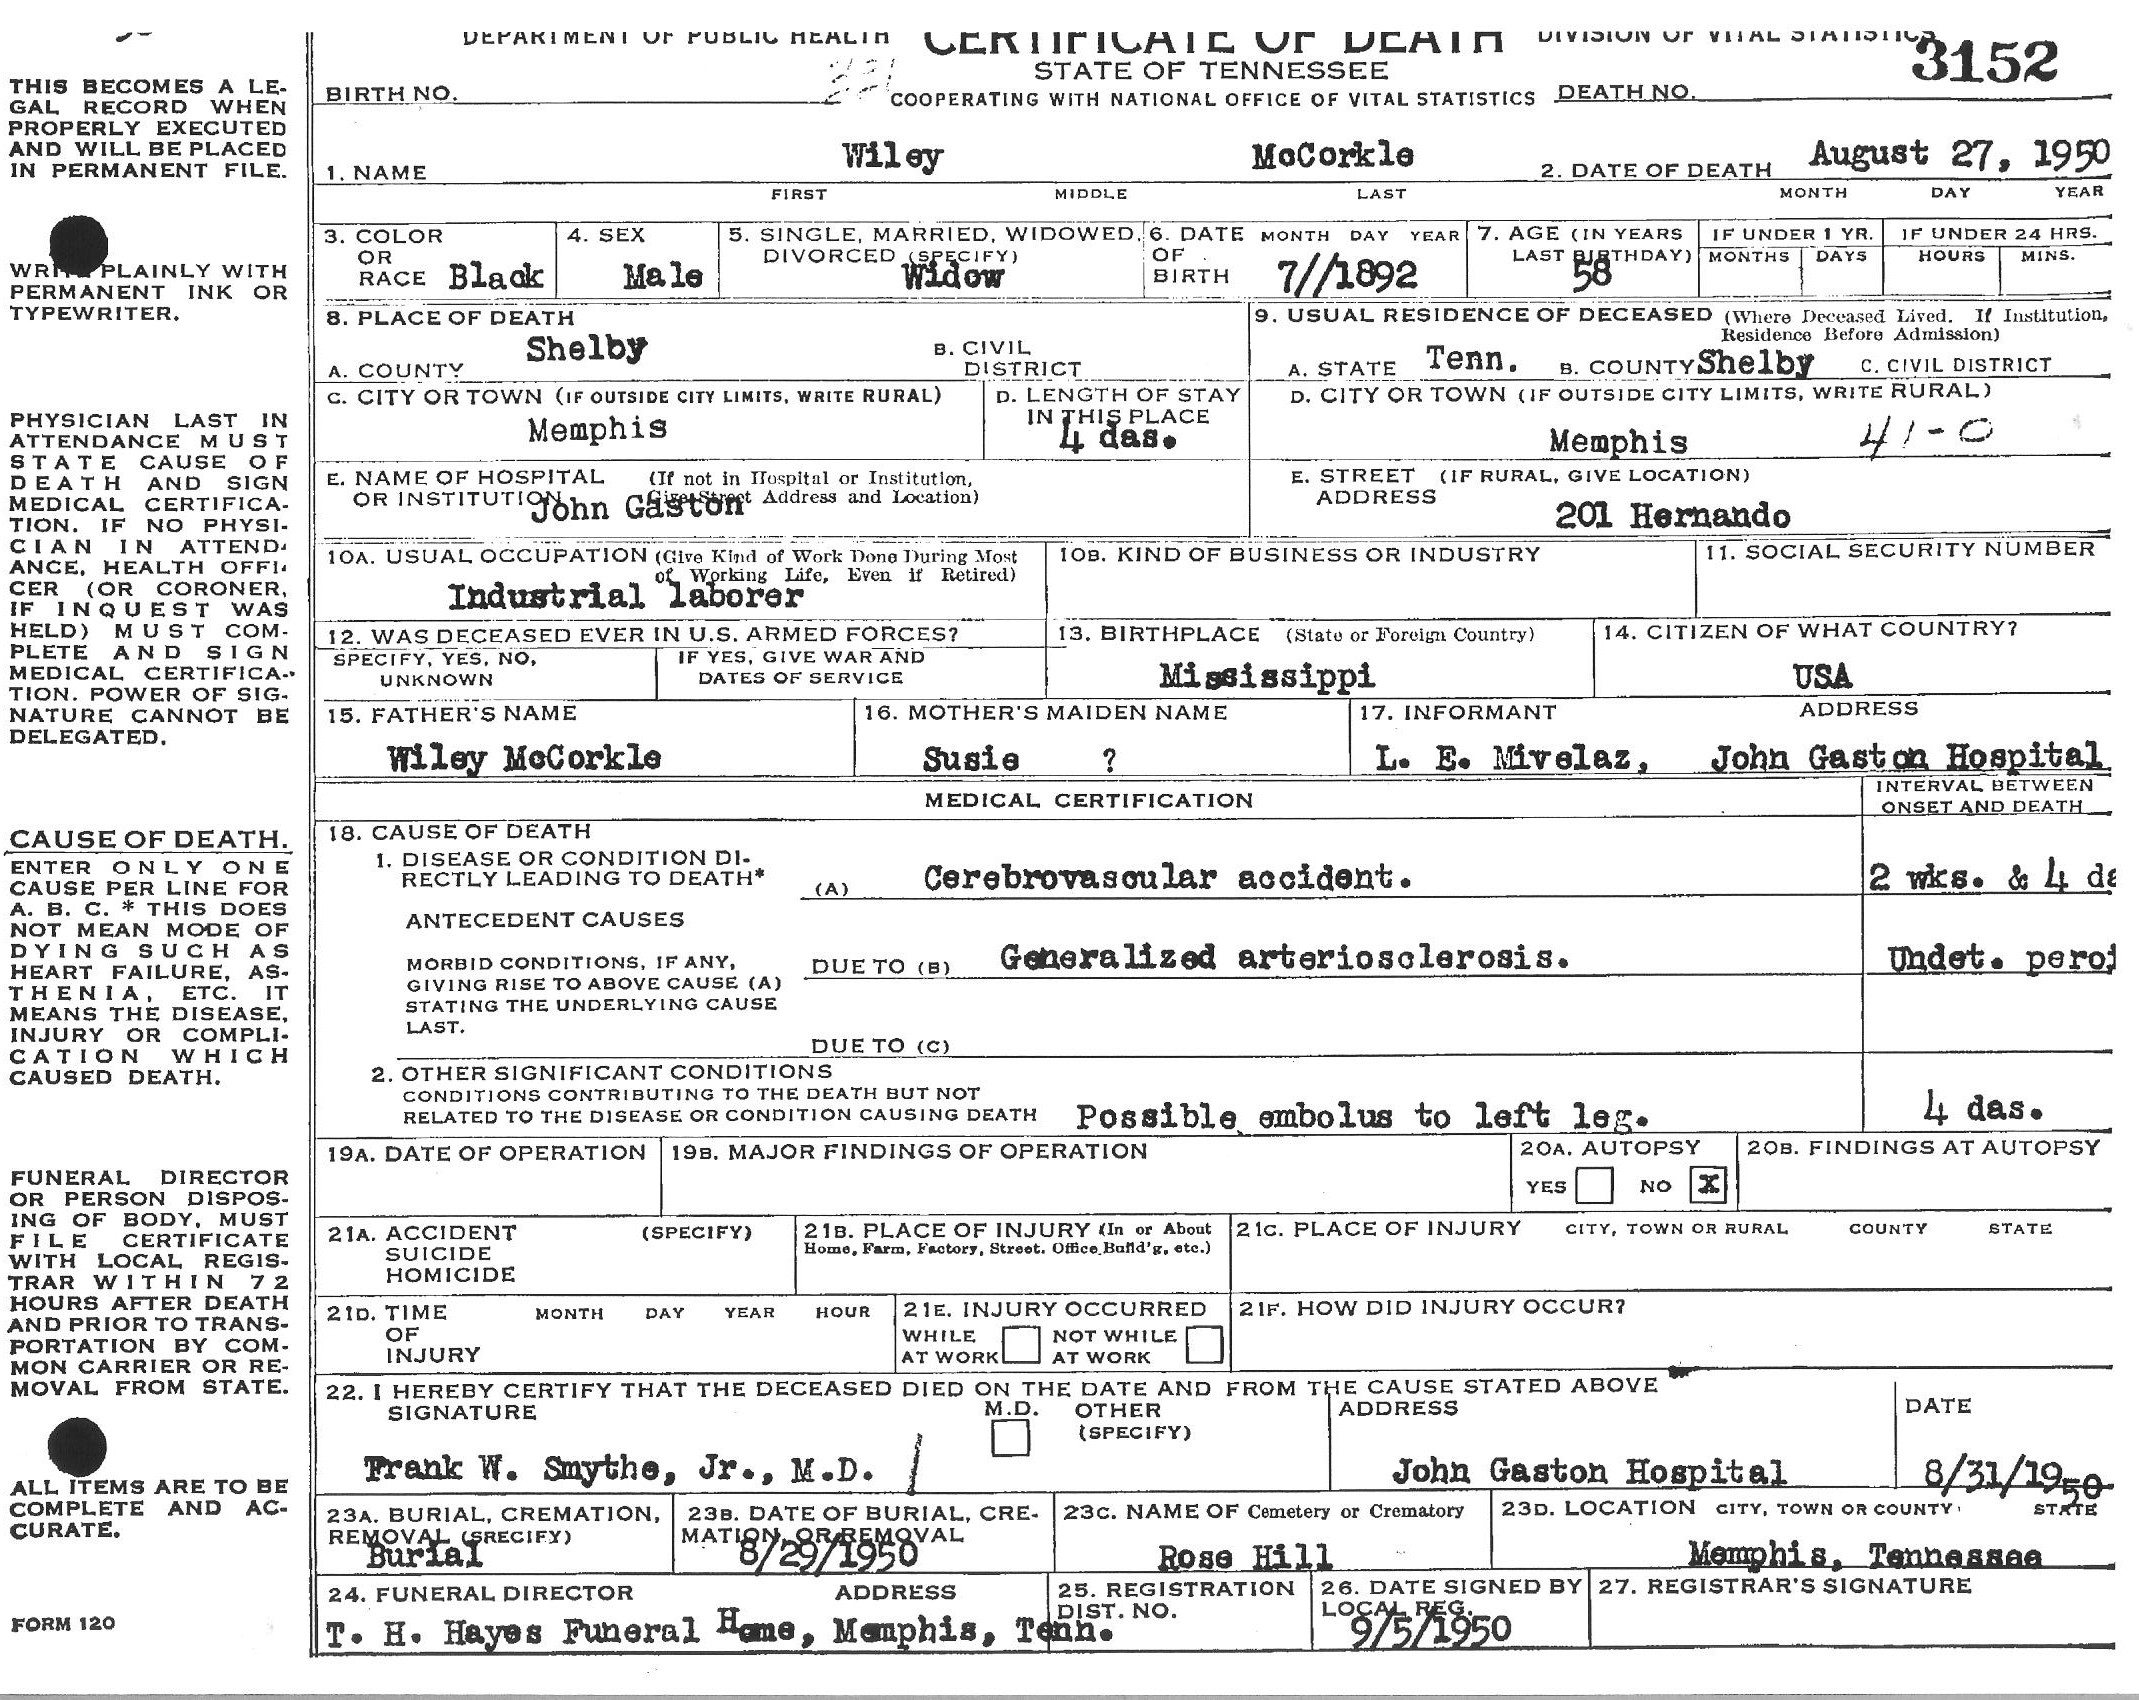 Wiley Holmes McCorkle Jr.'s Death Certificate